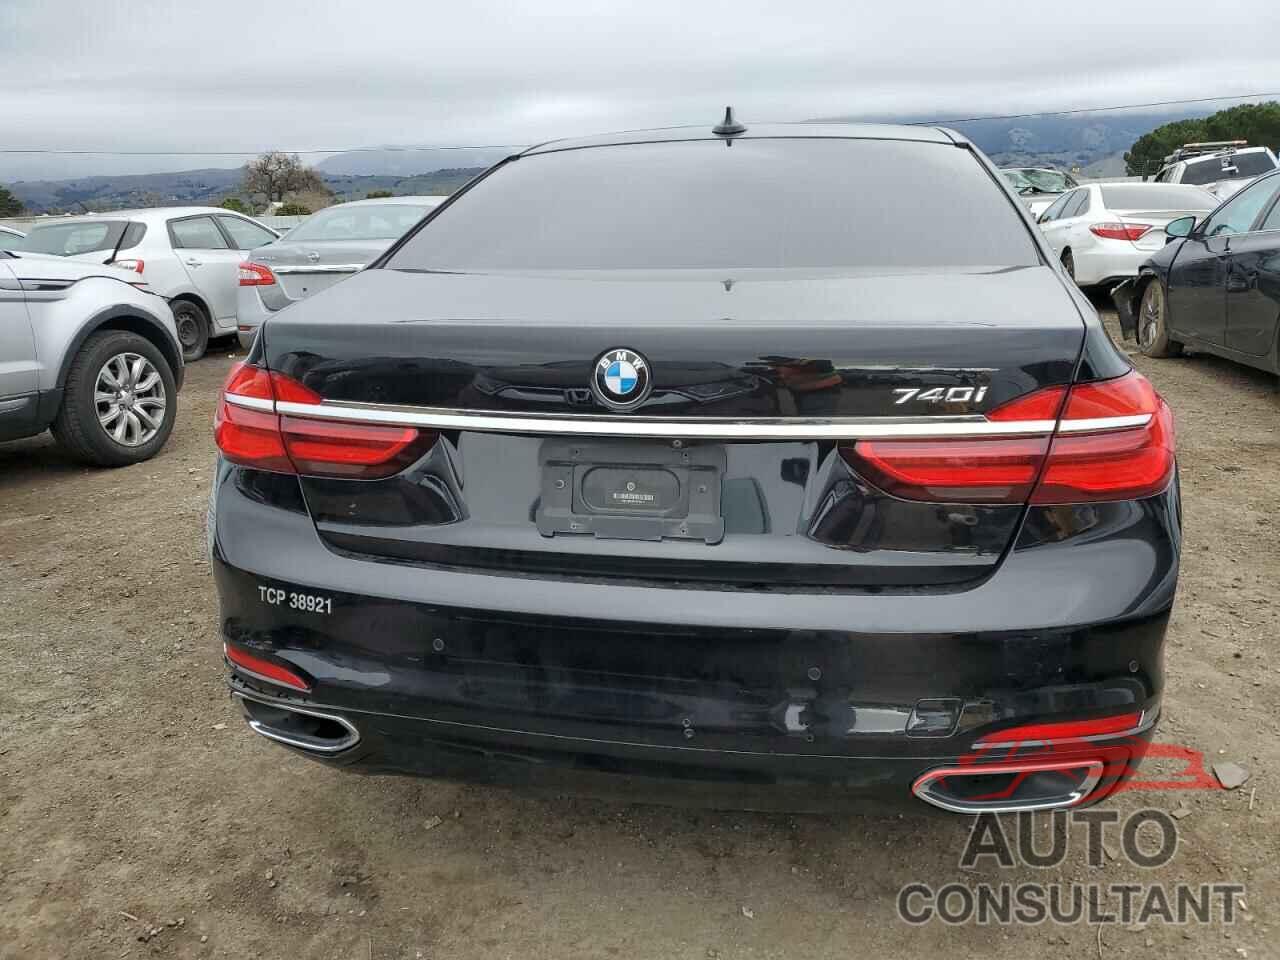 BMW 7 SERIES 2018 - WBA7E2C55JG742371